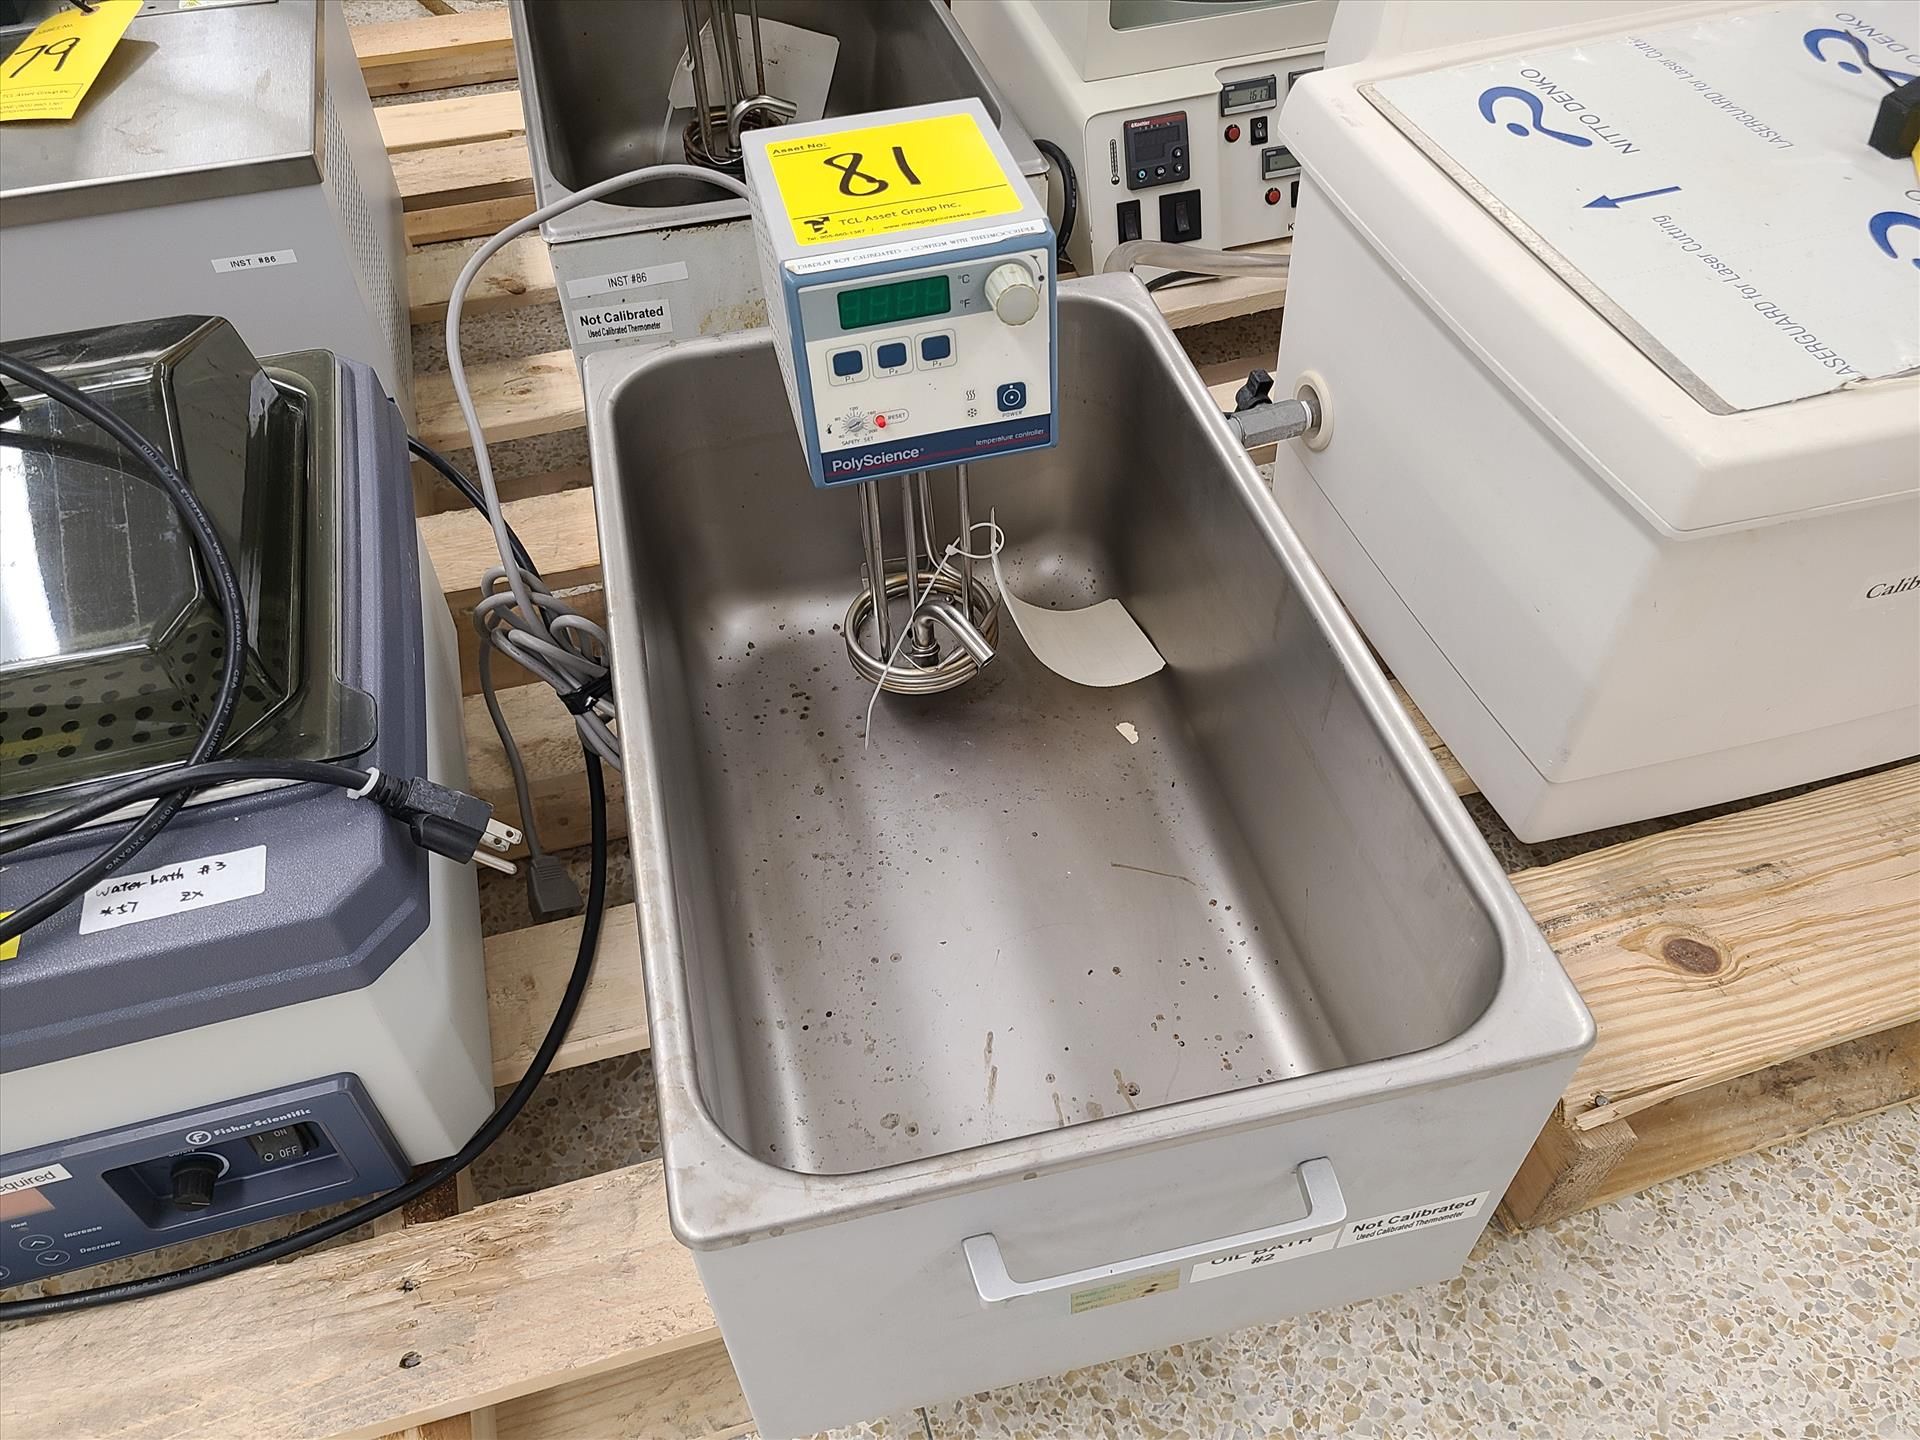 PolyScience Water Bath, ser. no. B06A00112, w/ PolyScience temperature controller, mod. 7306A11B,